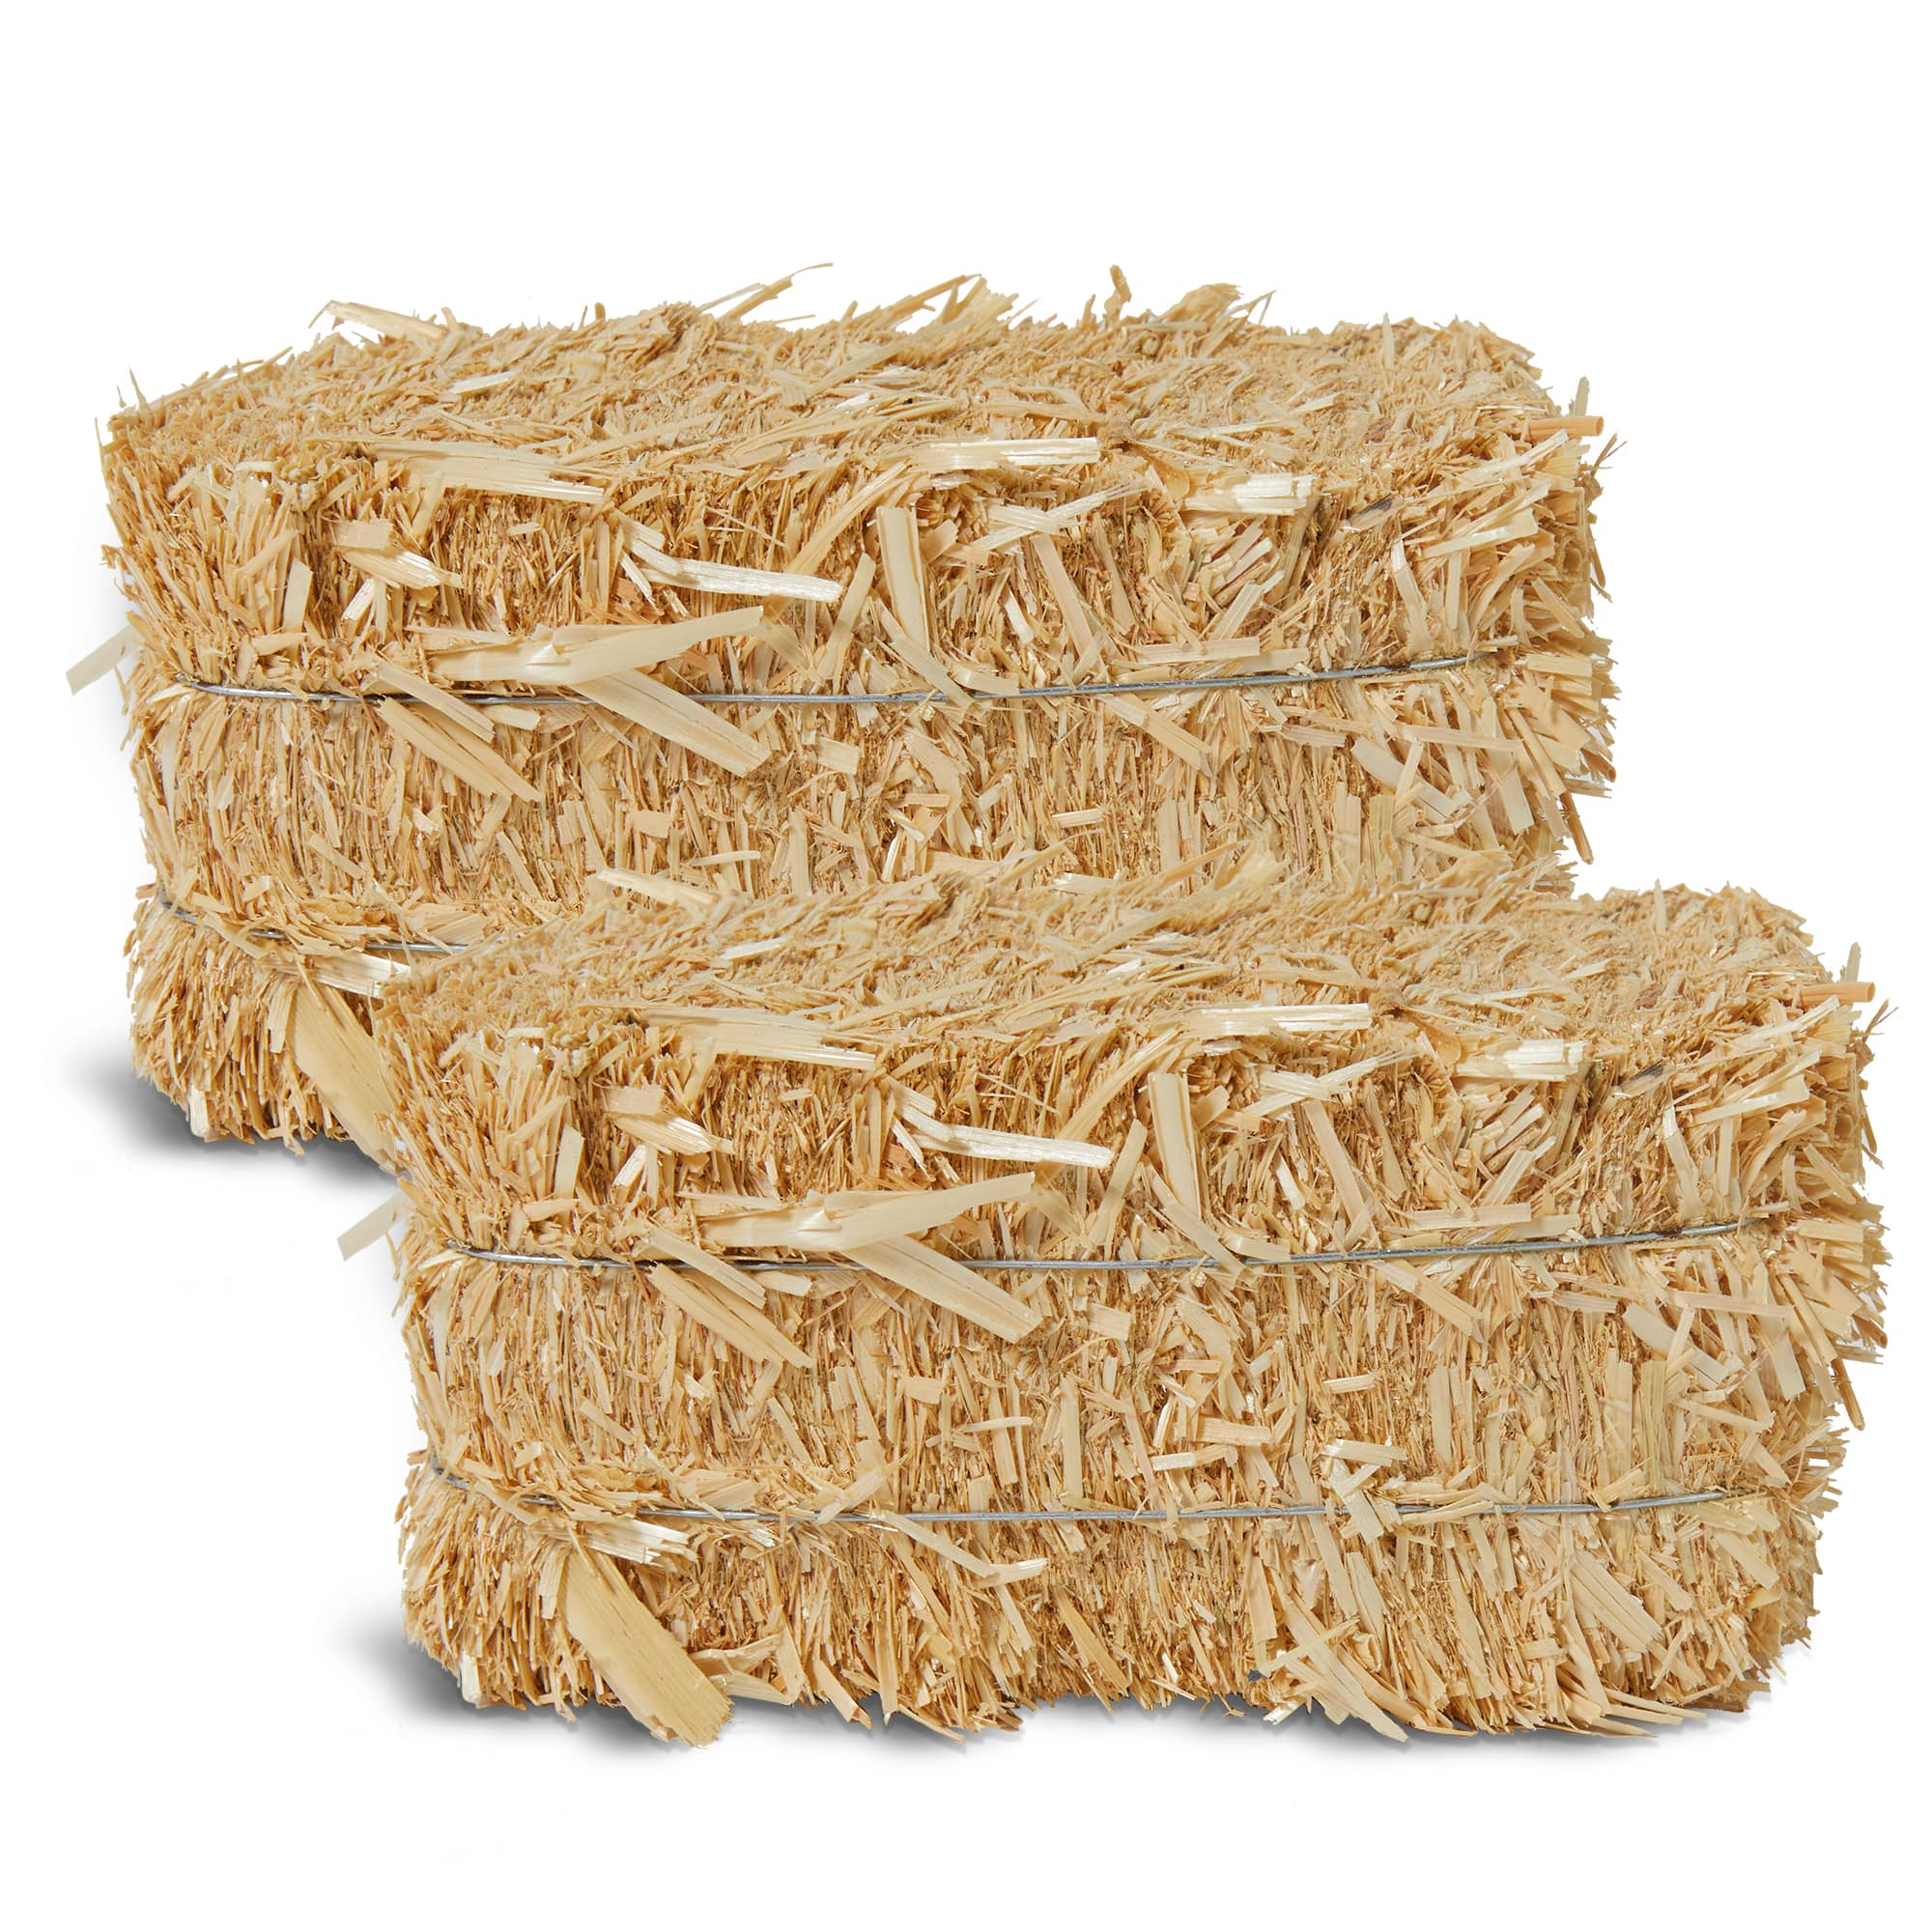 Buy in Bulk - 12 Pack: 2 Straw Bale by Ashland®